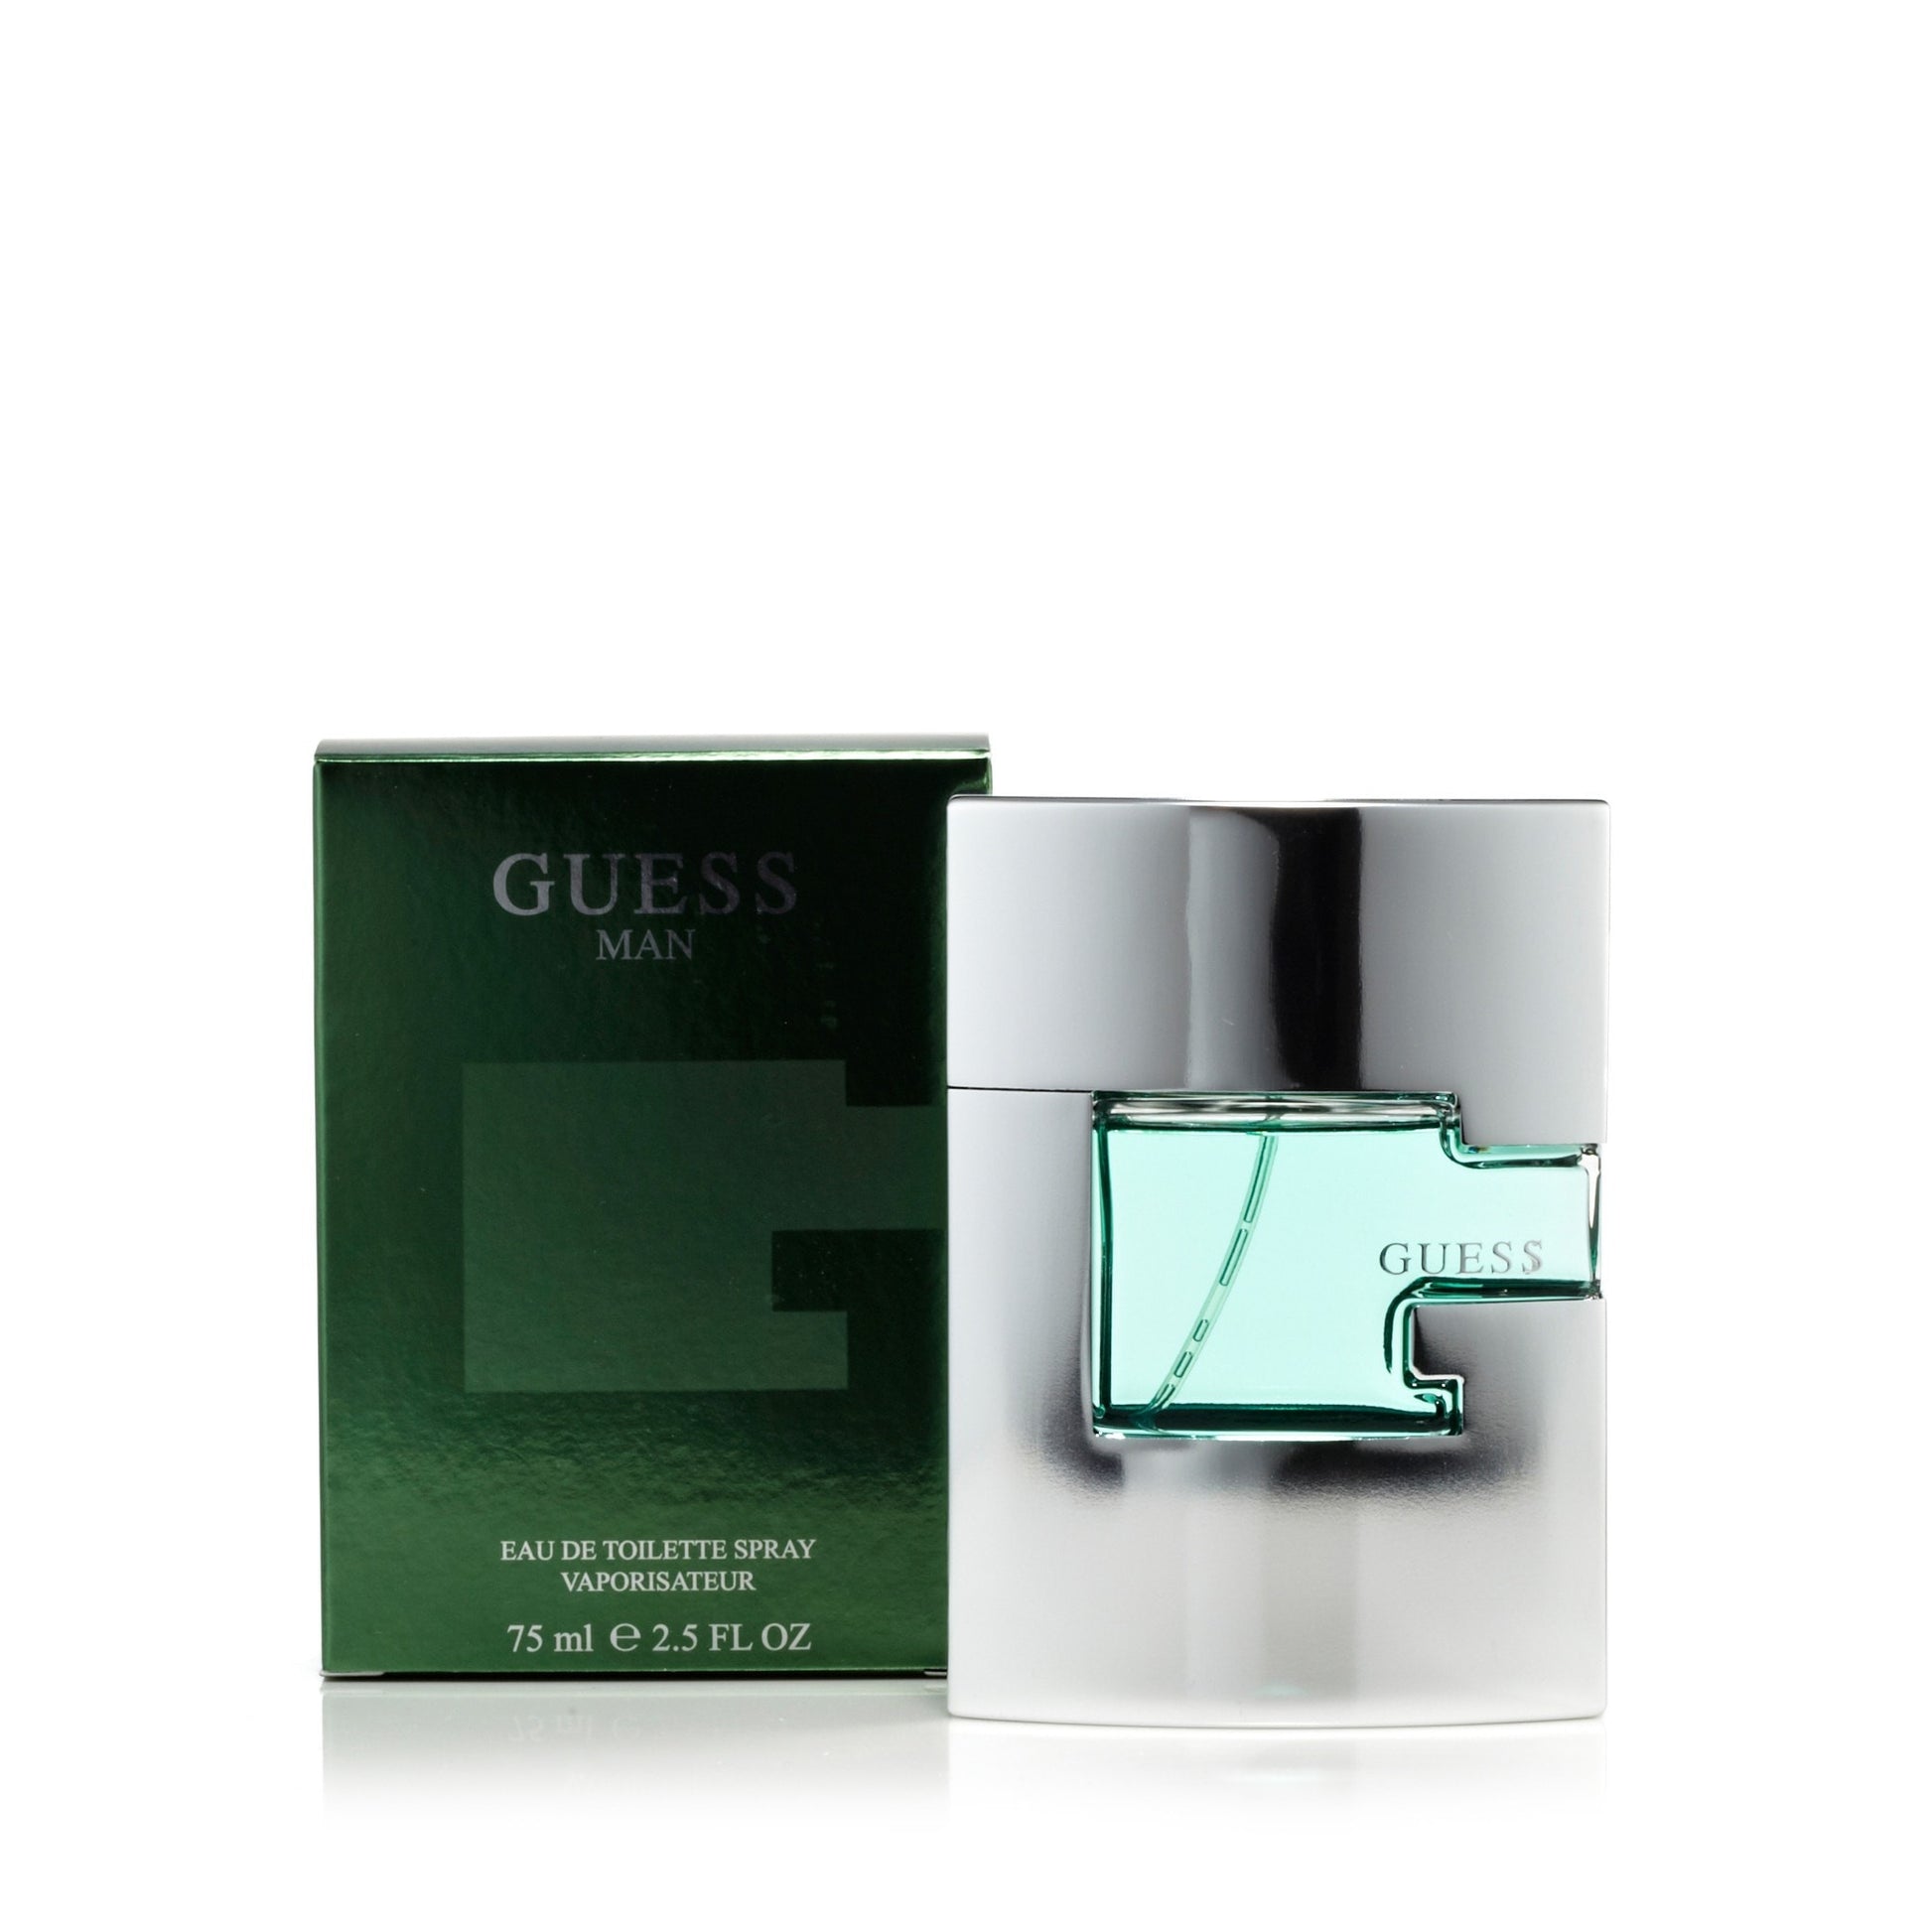  Guess Eau de Toilette Spray for Men by Guess 2.5 oz. Click to open in modal